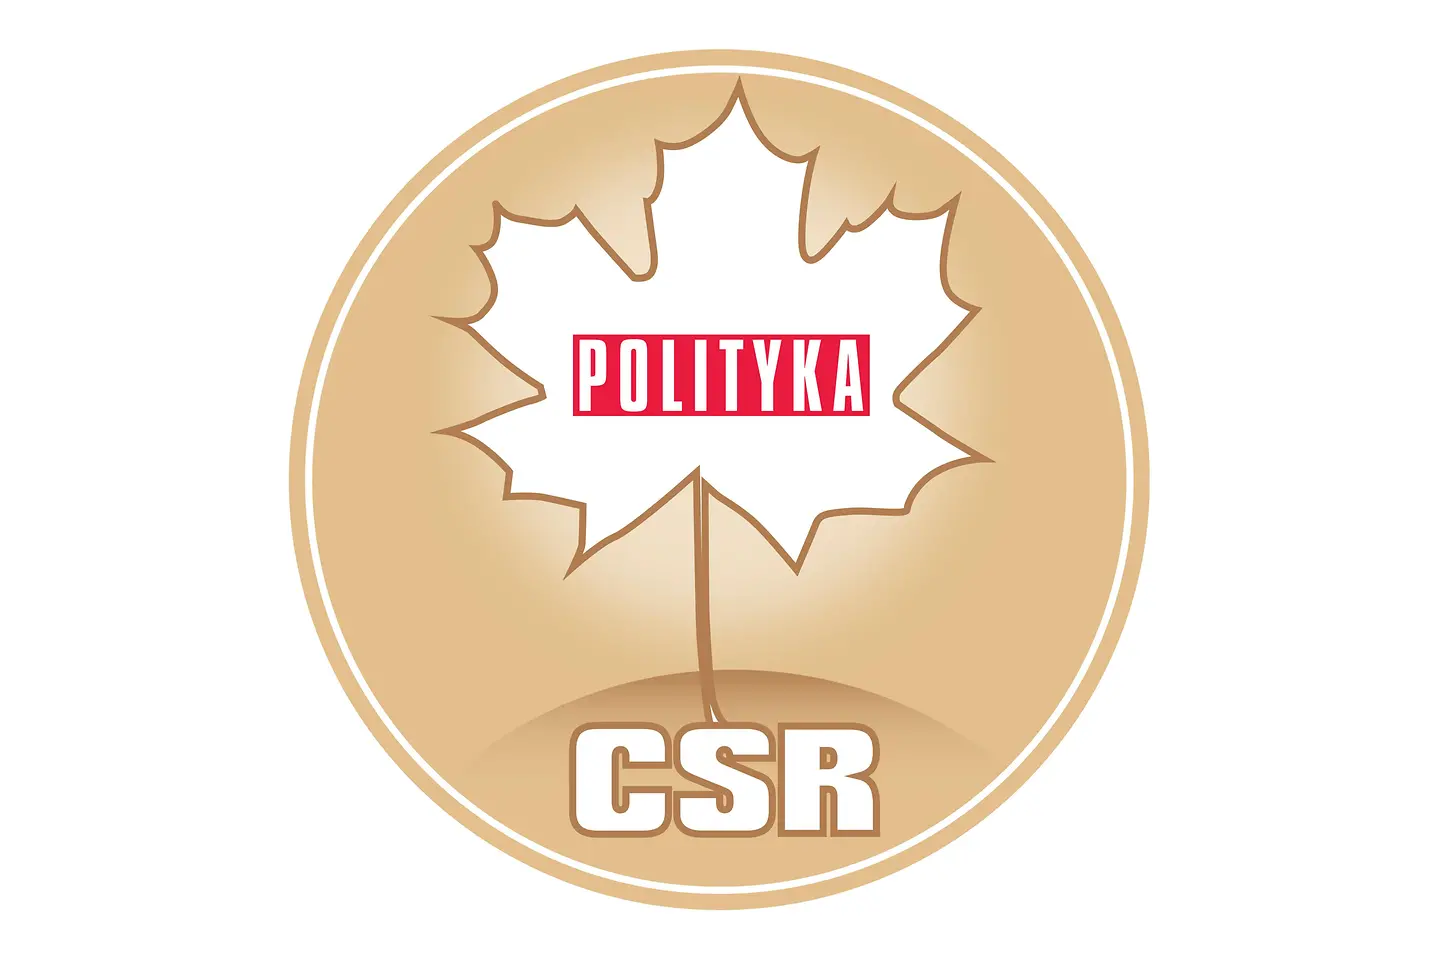 CSR Polityka braz